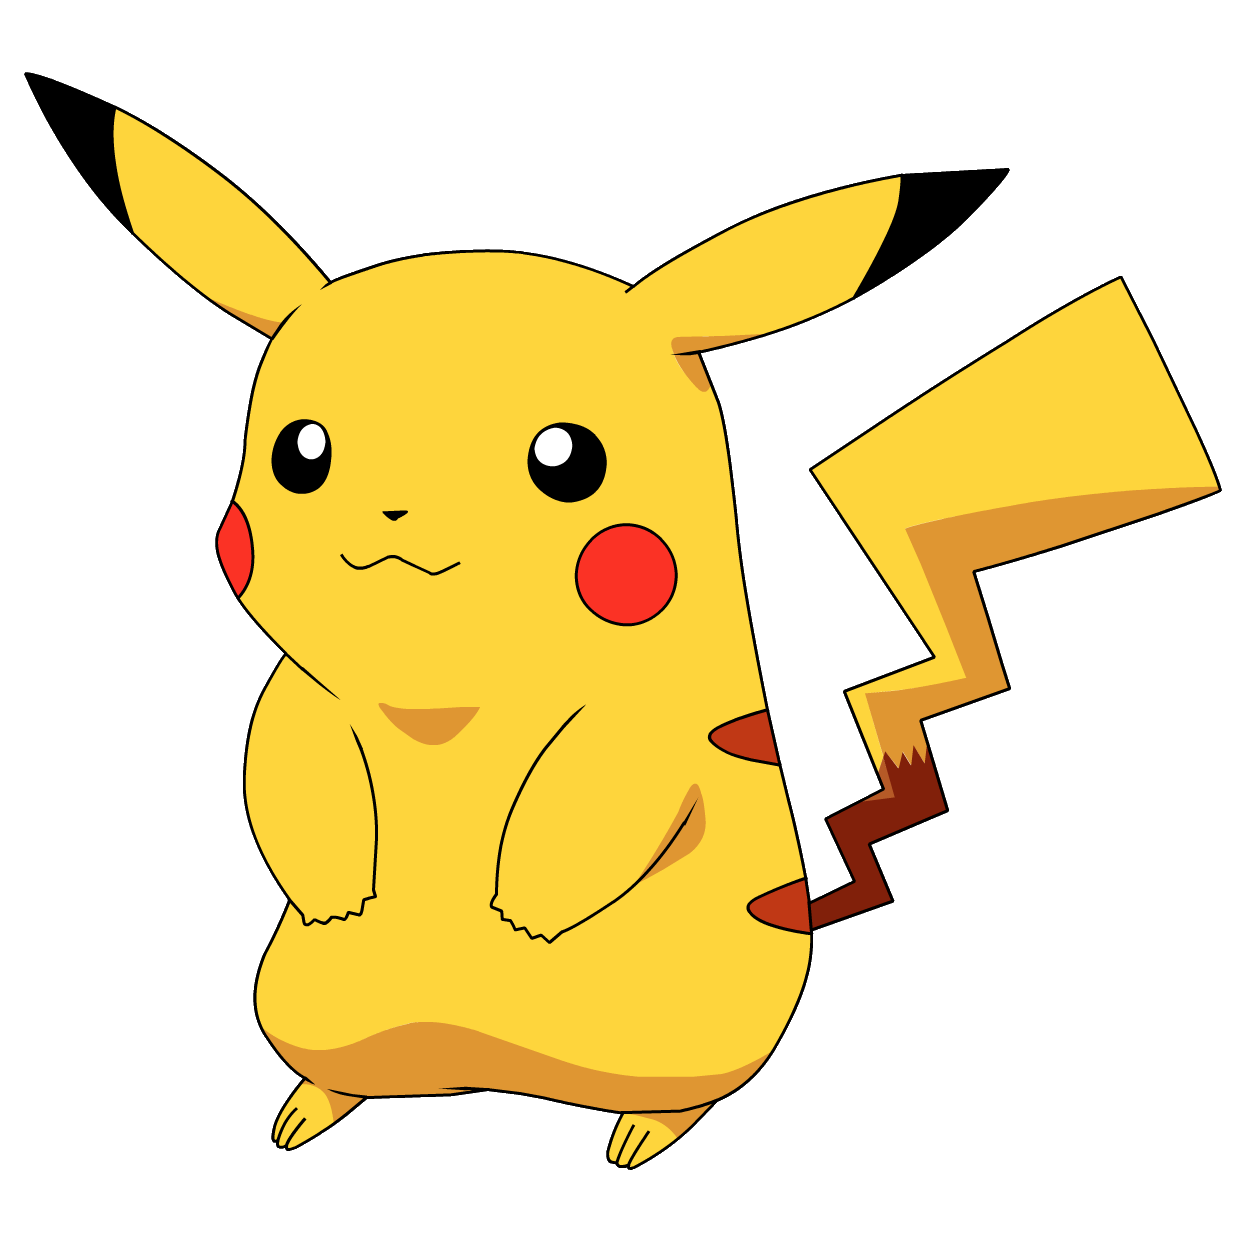 Pikachu Pokemon PNG Background Image